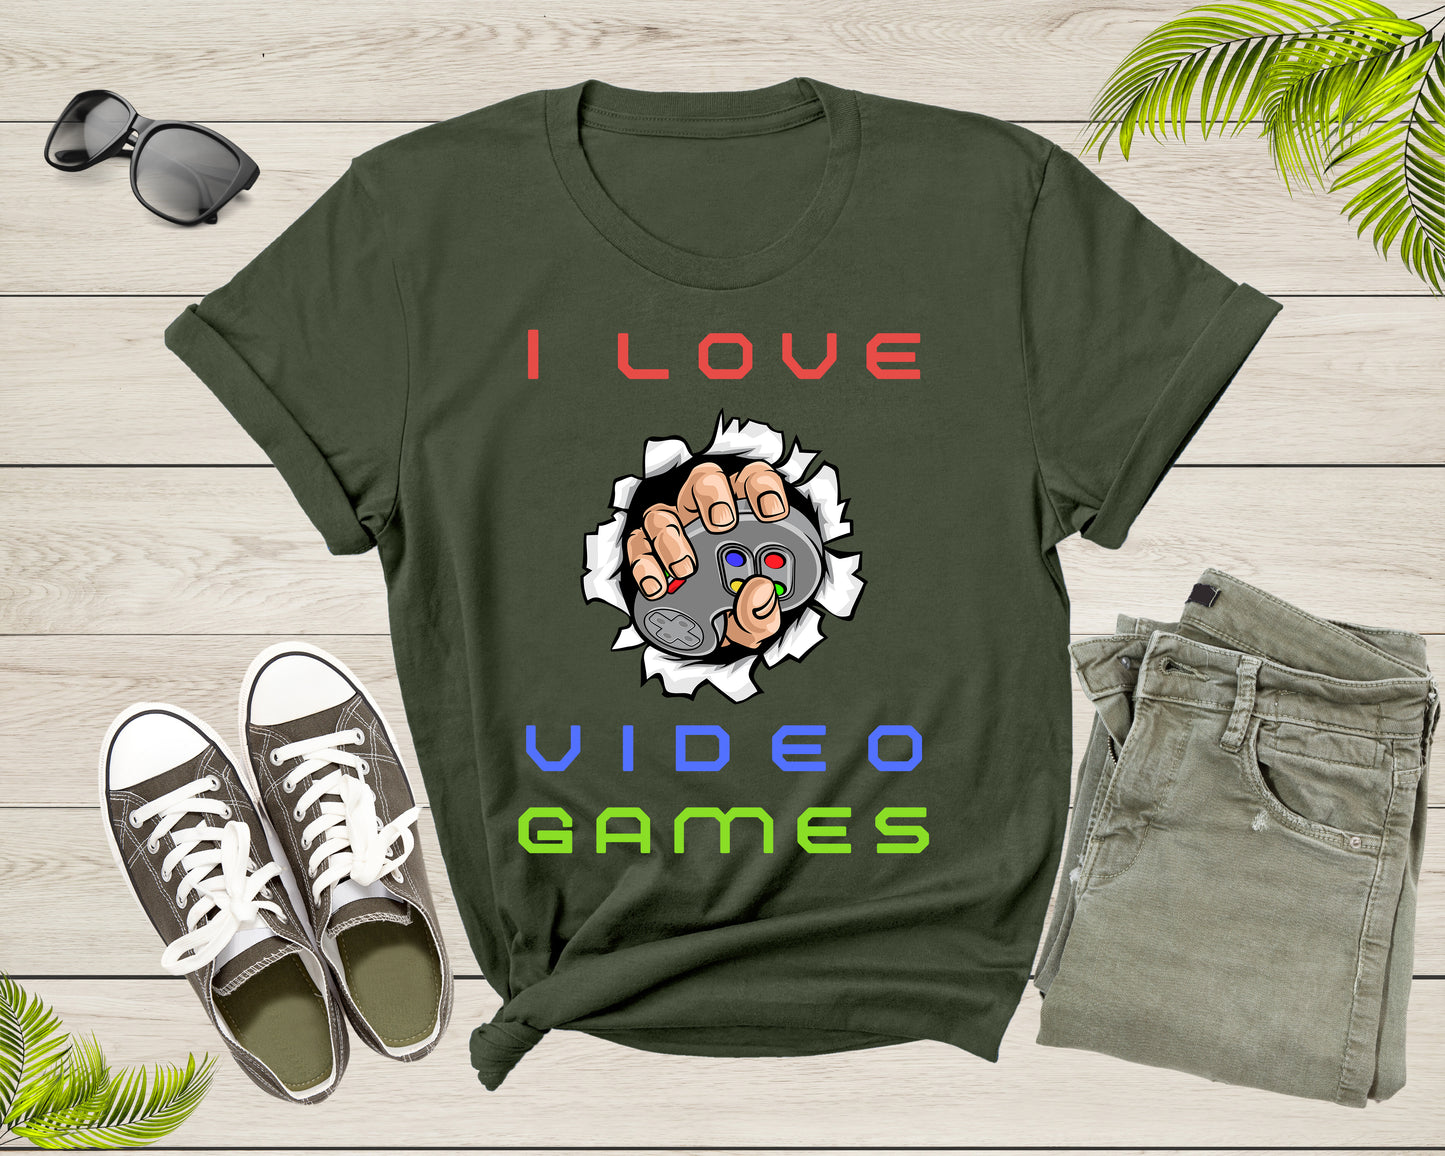 I Love Video Games Gamer Player Computer Game Controller T-Shirt Gamer Game Lover Gift T Shirt for Men Women Kids Boys Girls Teens Tshirt